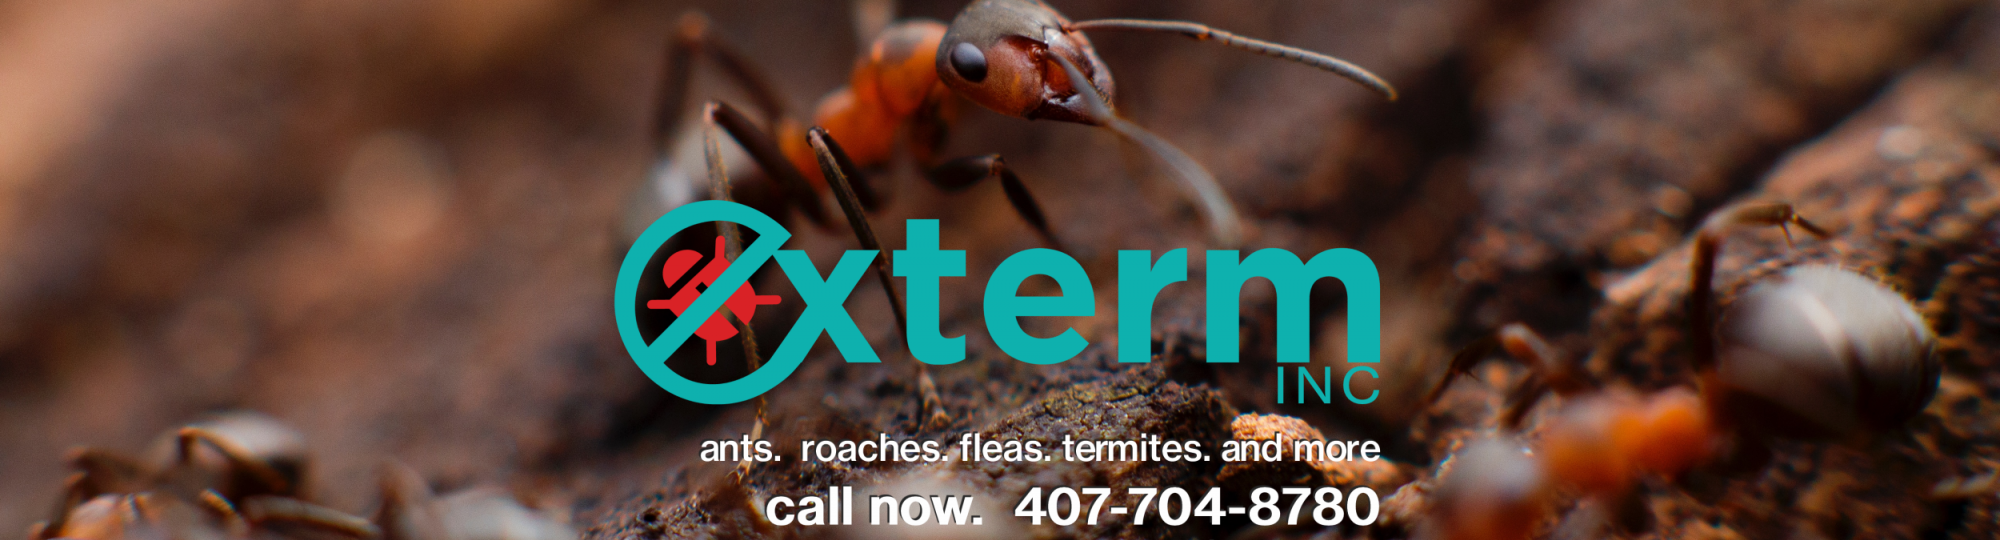 exterm-ants-banner